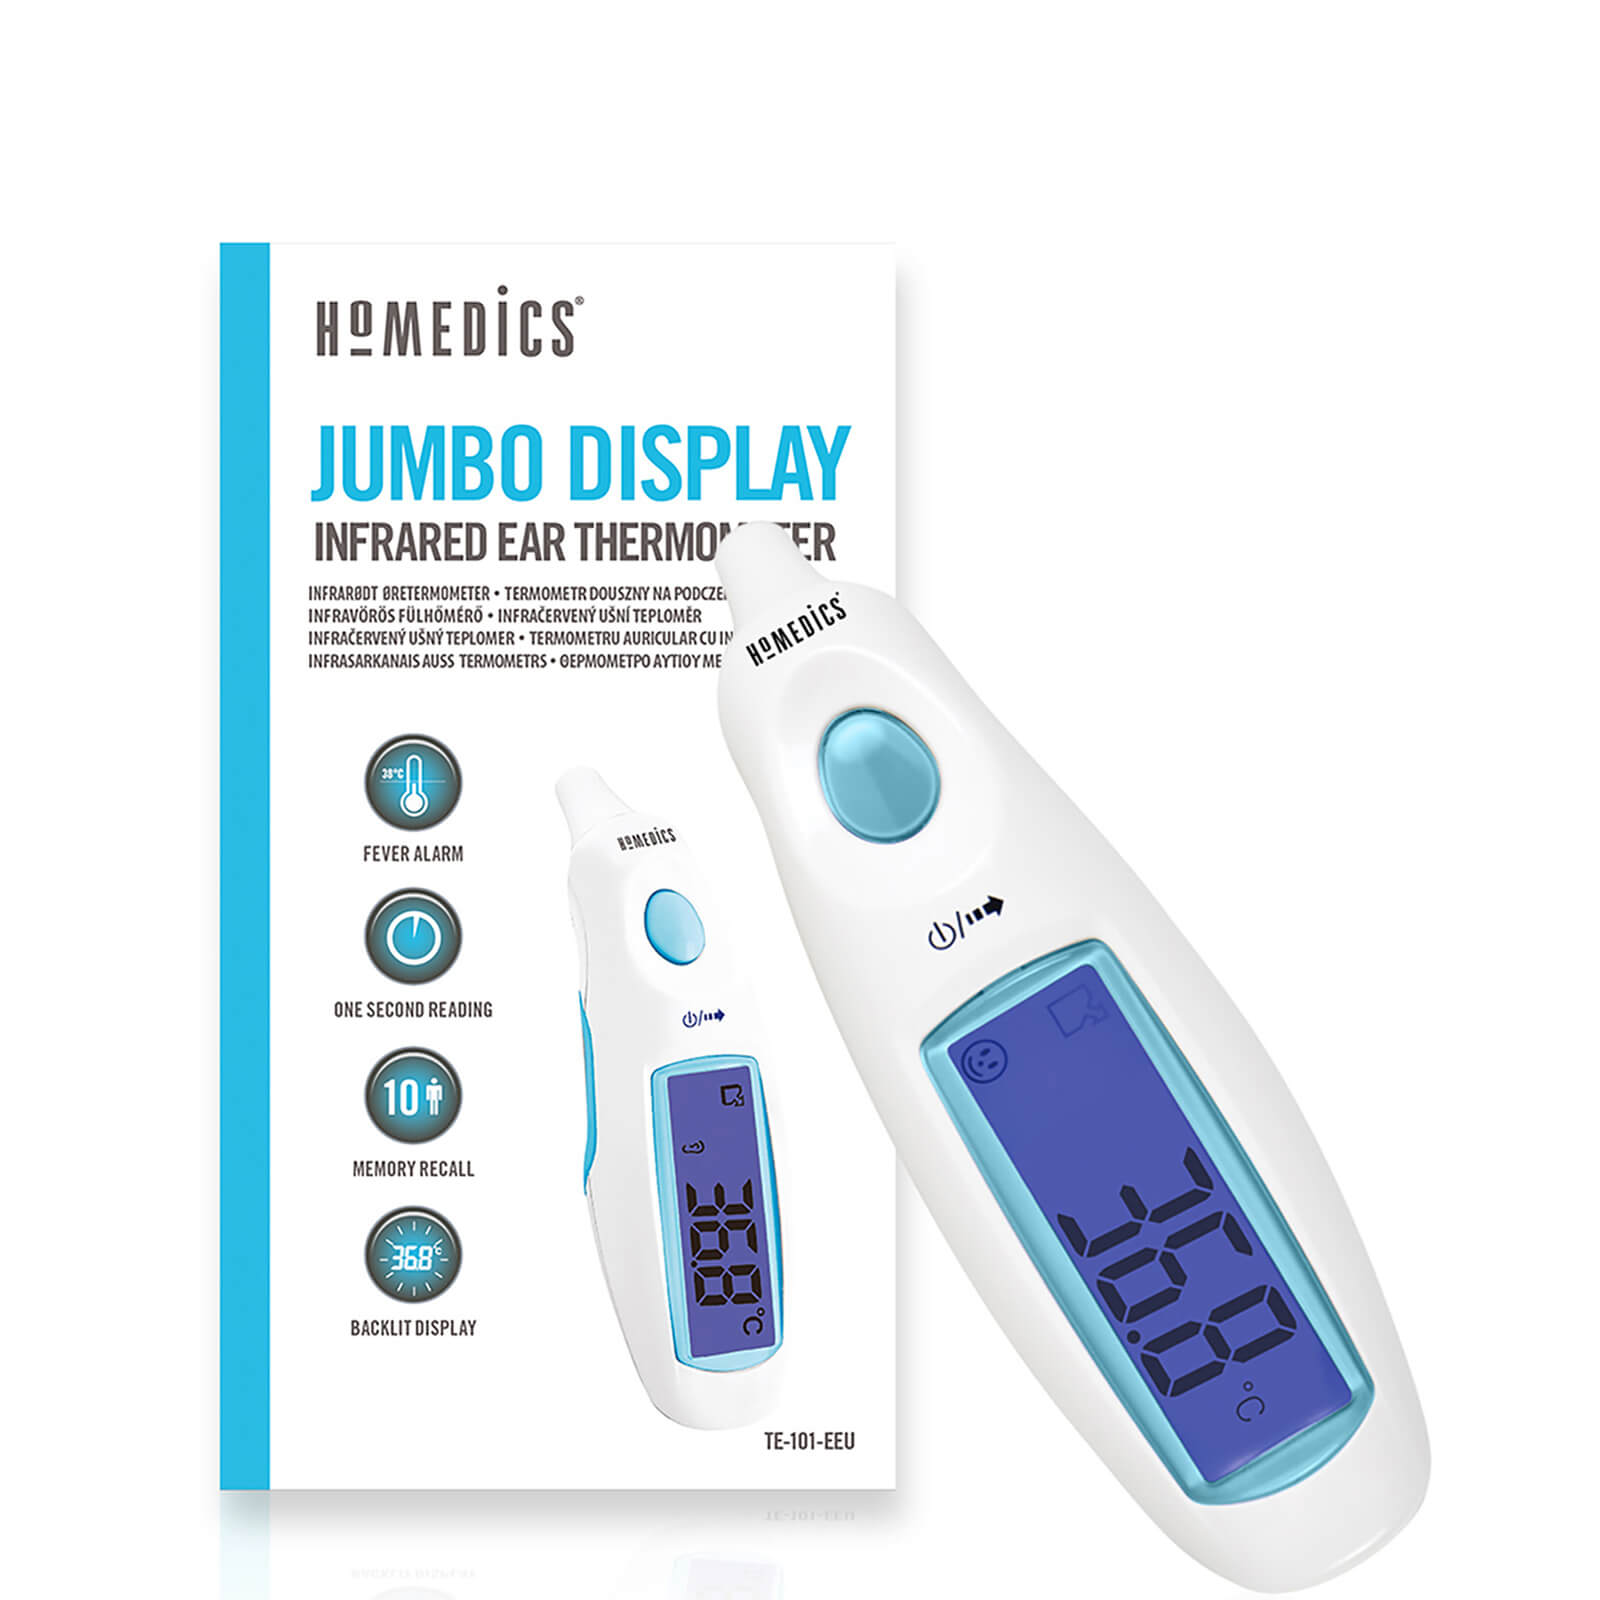 HoMedics Jumbo Display Ear Thermometer lookfantastic.com imagine